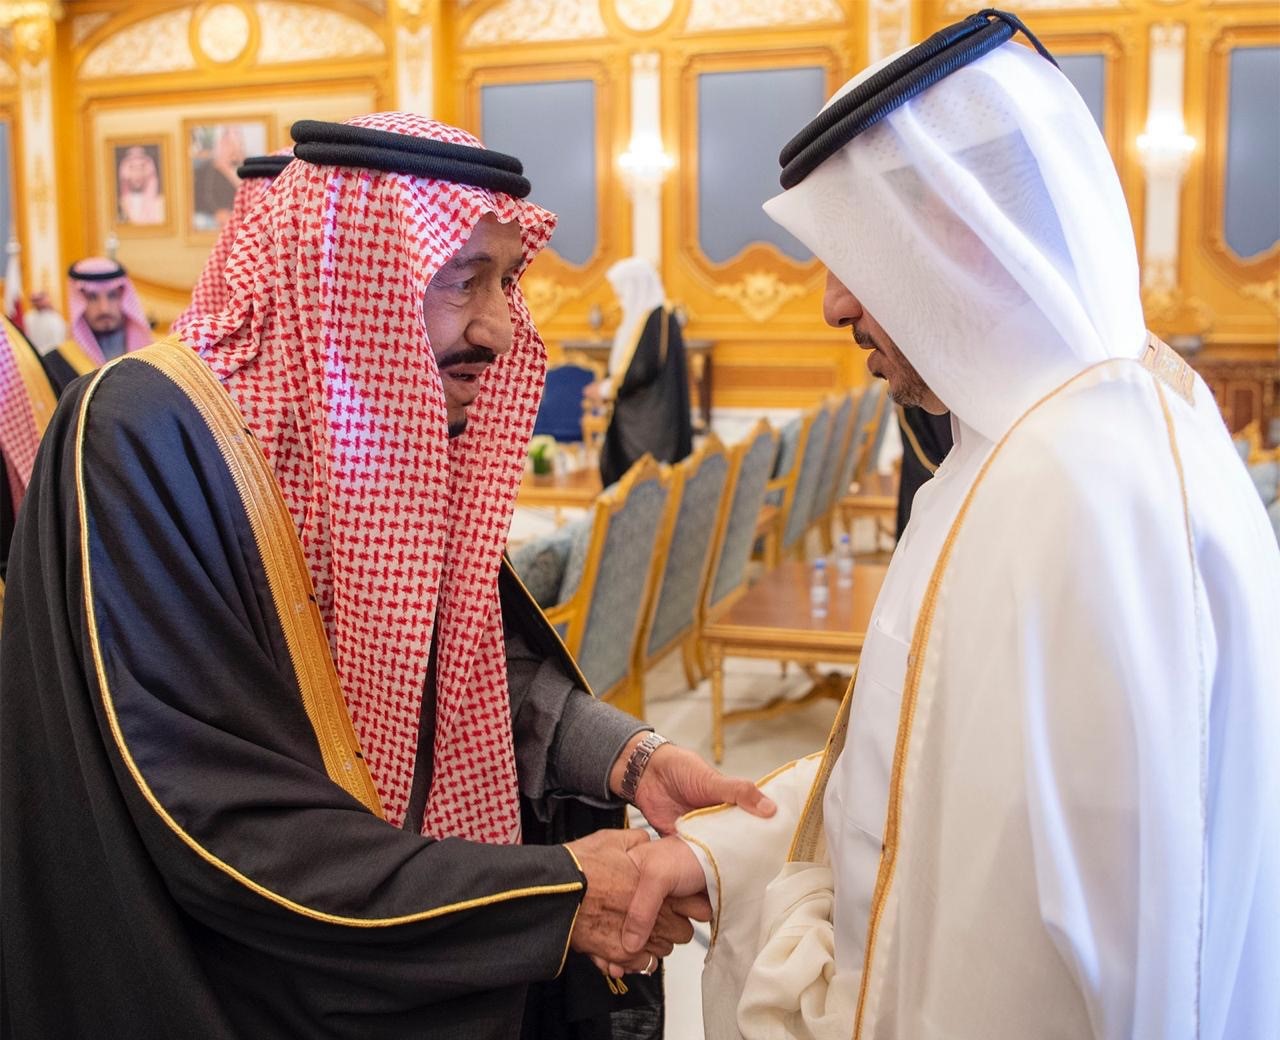 King Salman welcomed Qatar's Prime Minister